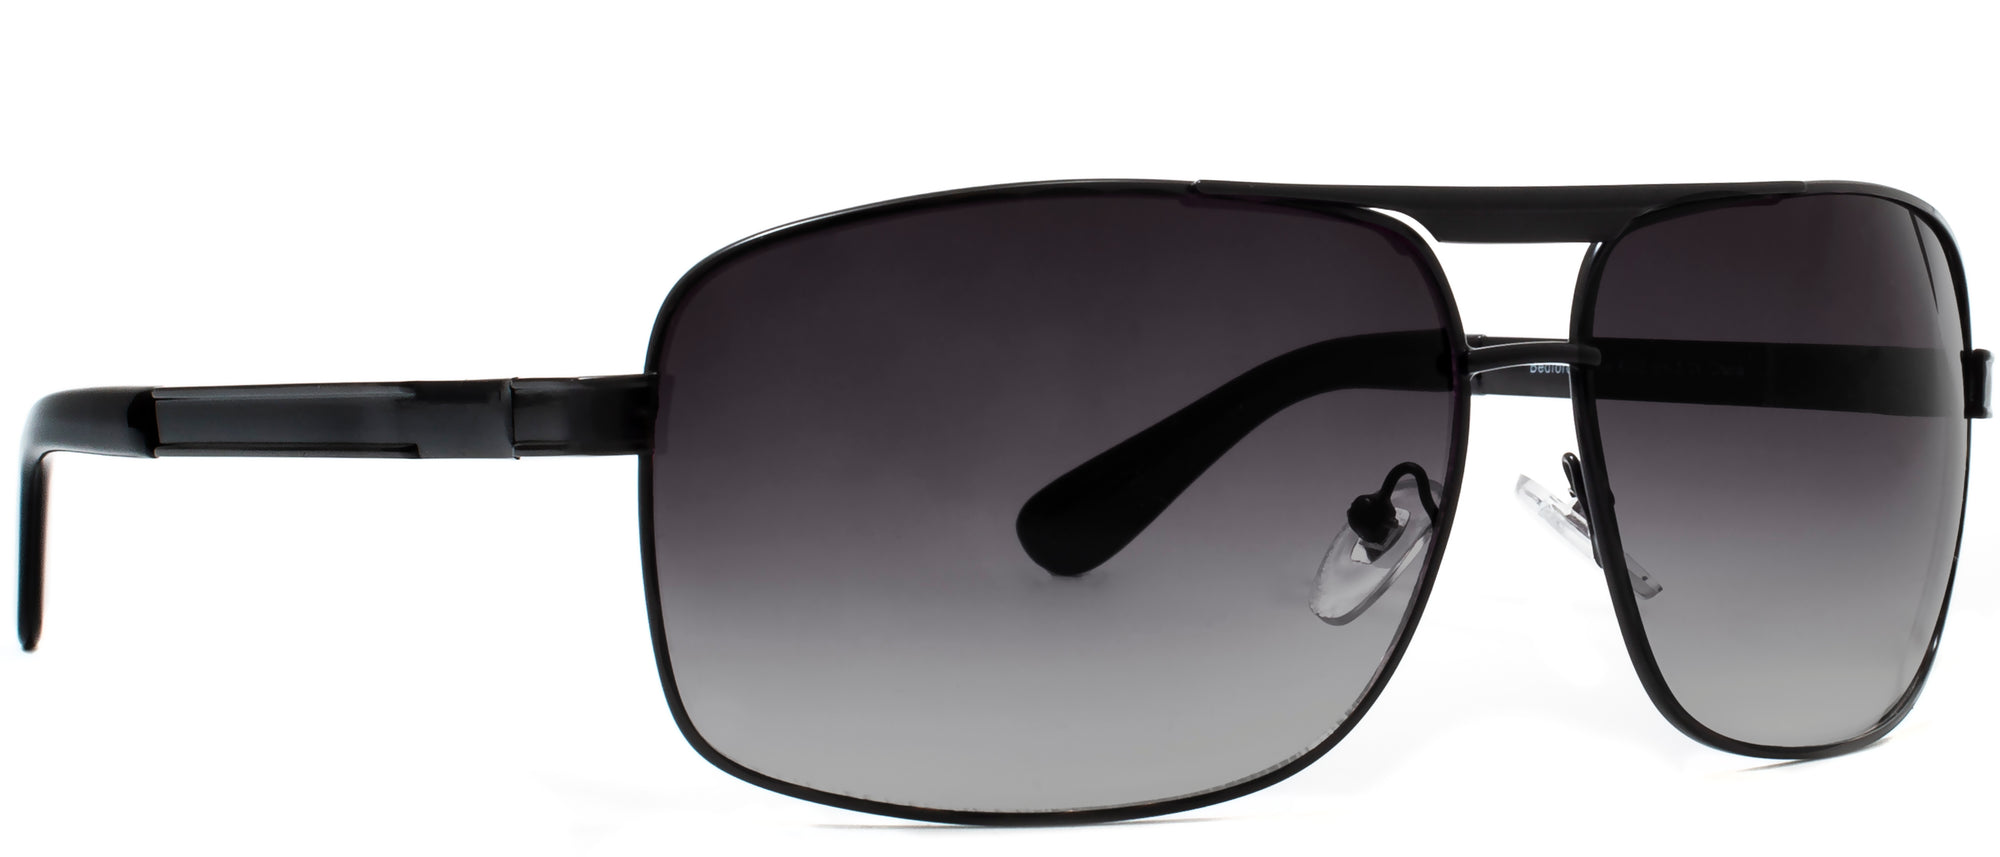 Bedford Avenue - Sunglasses NYS Collection Eyewear Gunmetal/Black